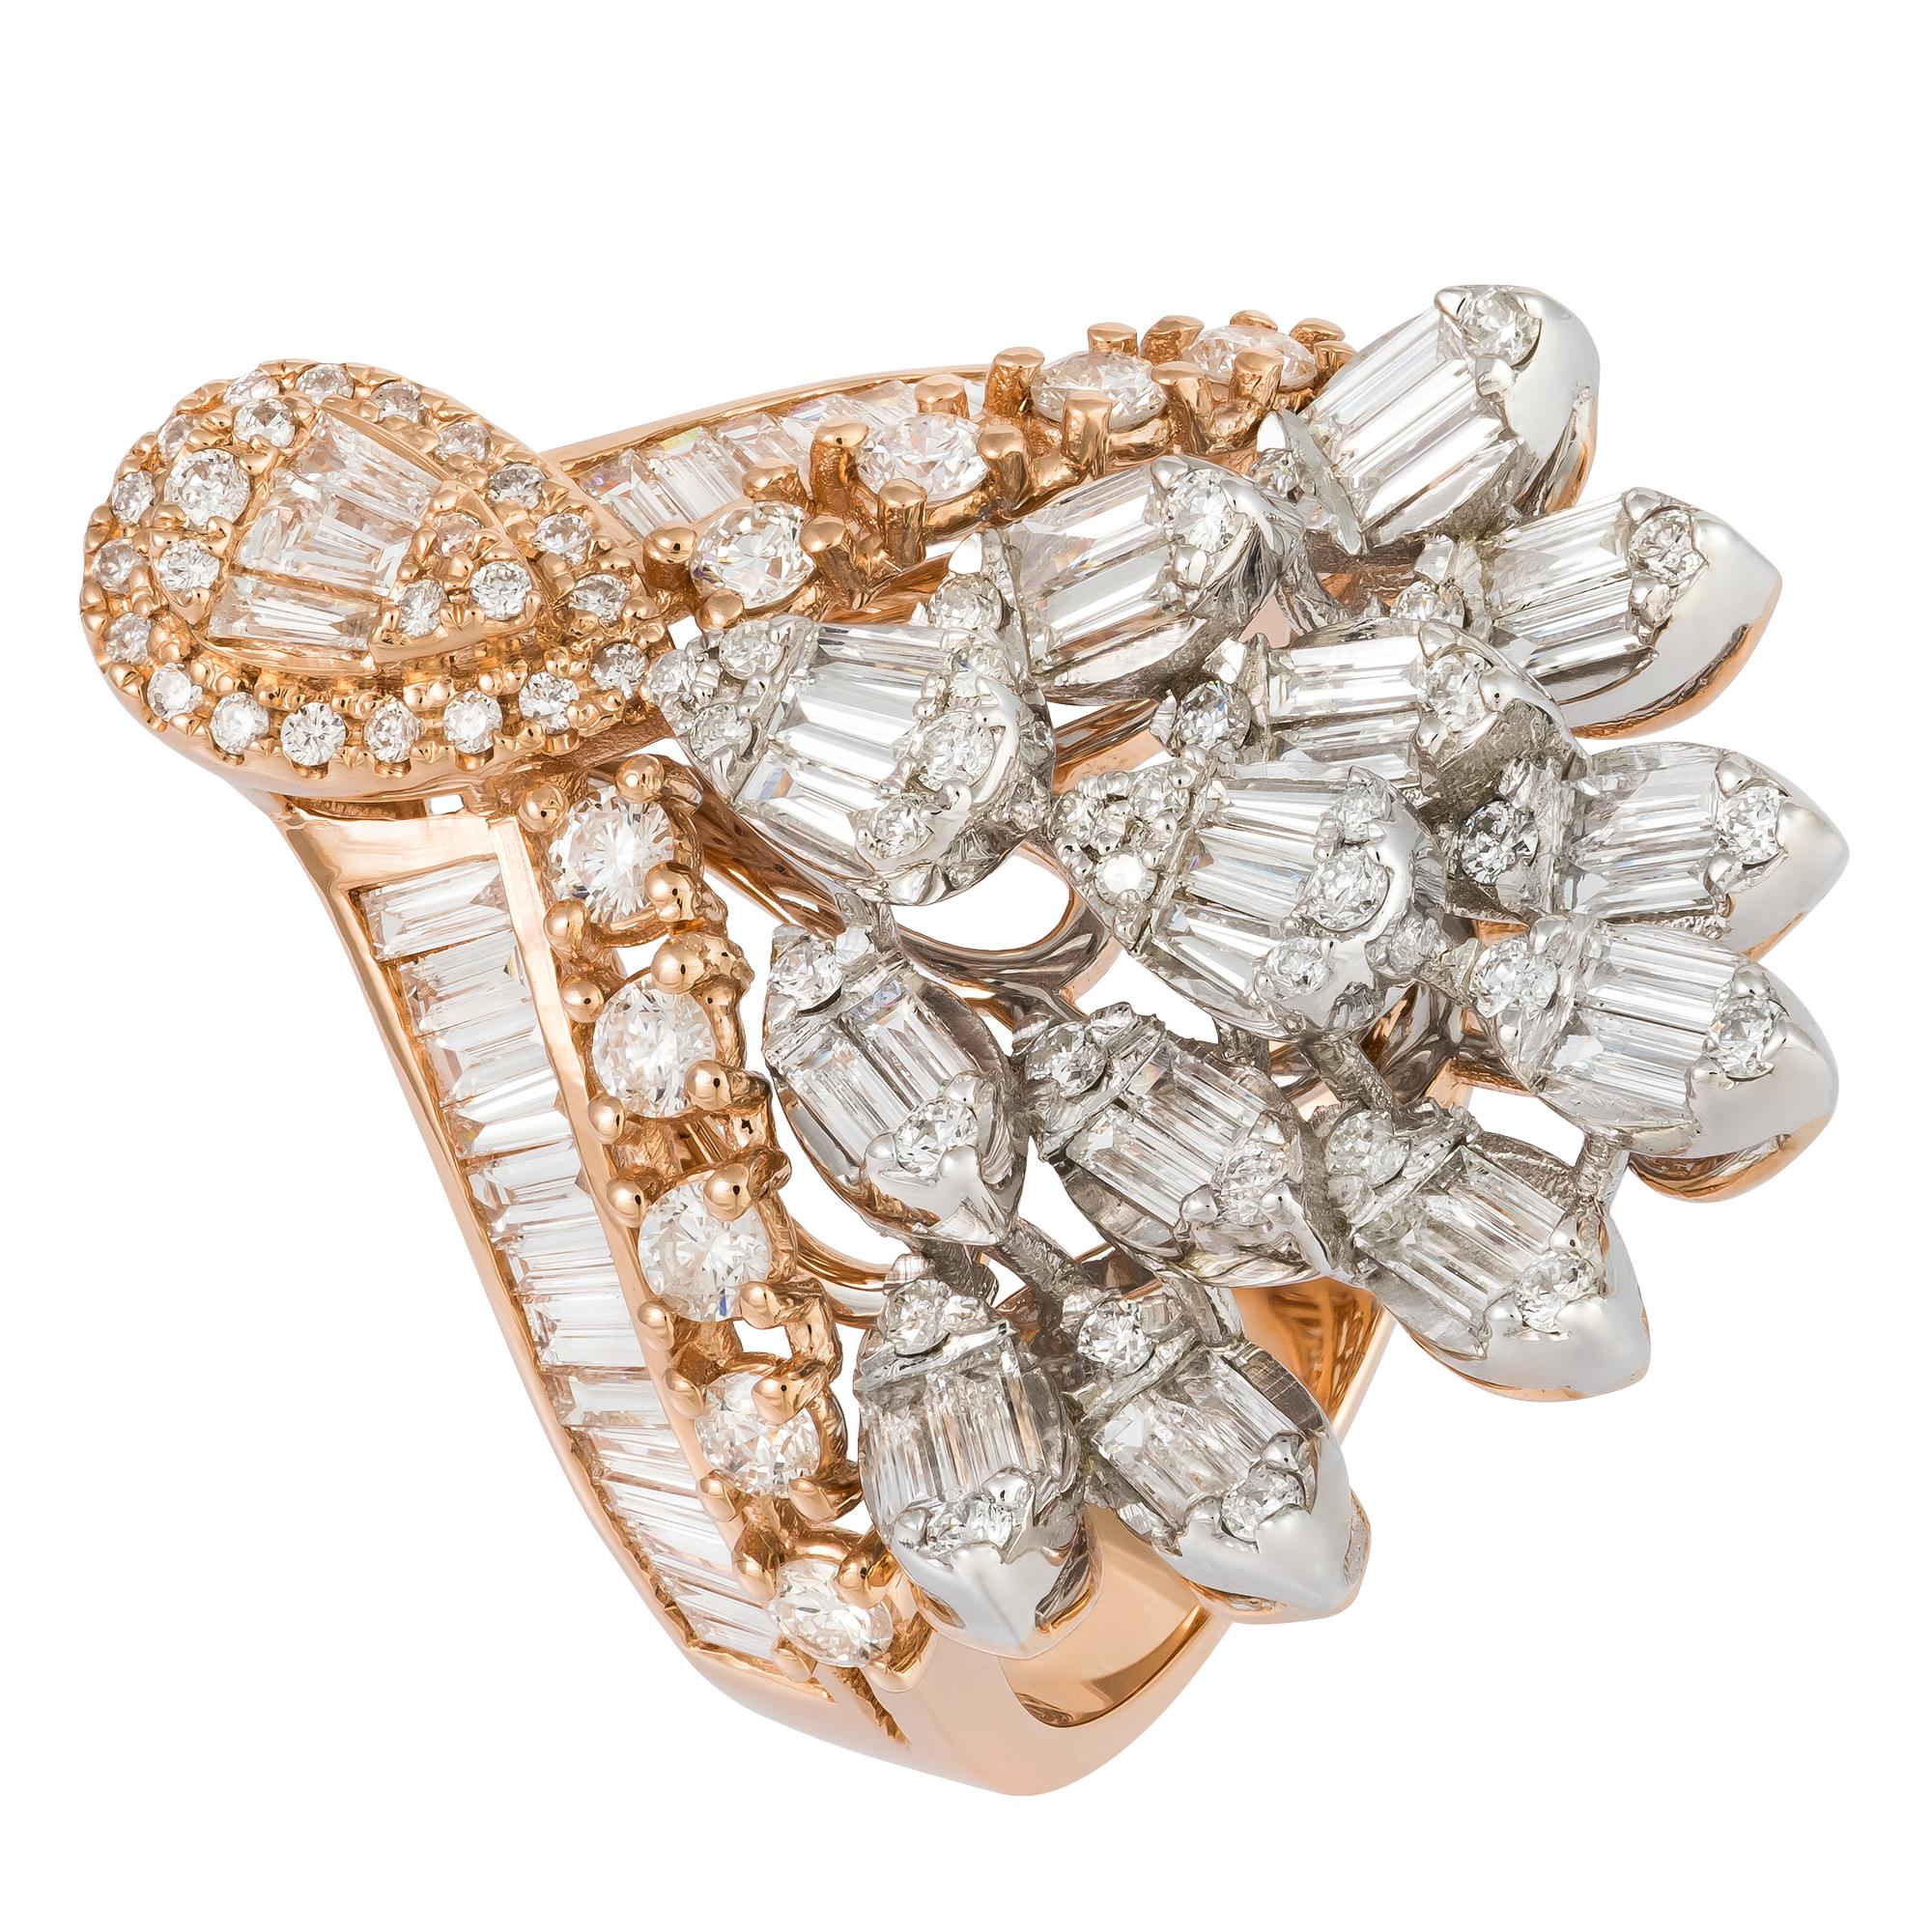 For Sale:  Sparkling  White Pink 18K Gold White Diamond Ring For Her 2